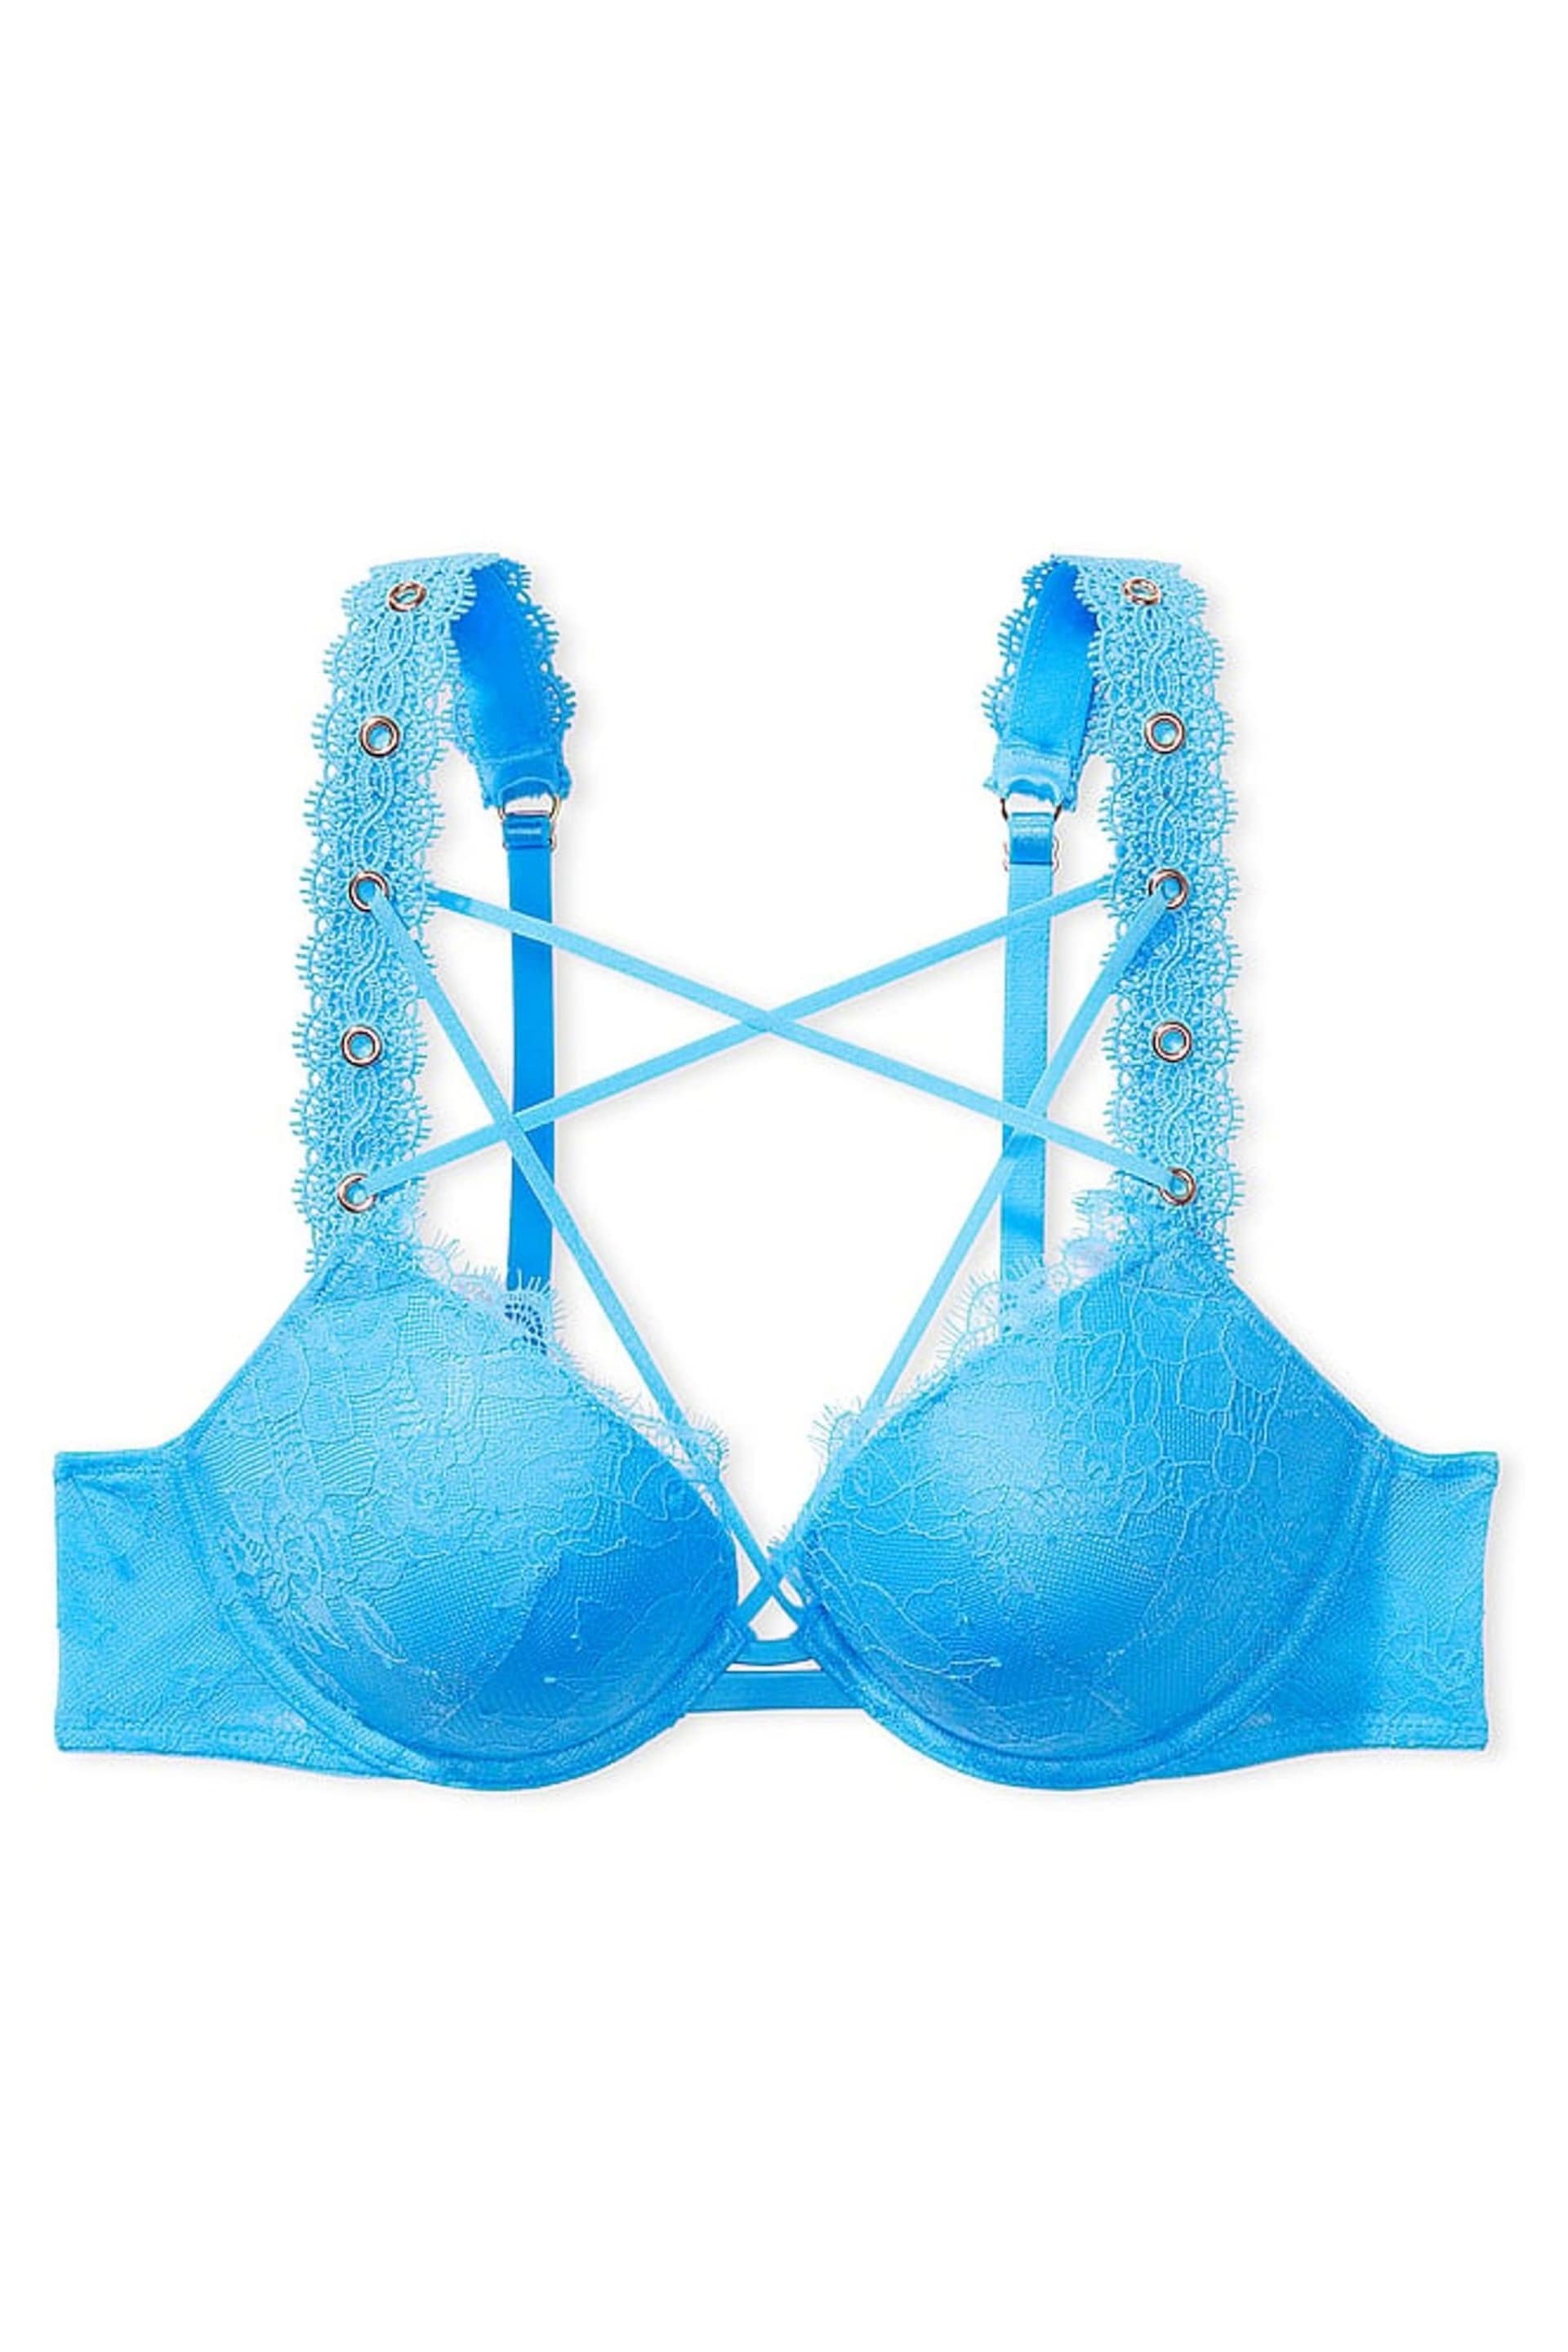 Victoria's Secret Capri Blue Push Up Eyelet Lace Bra - Image 3 of 3